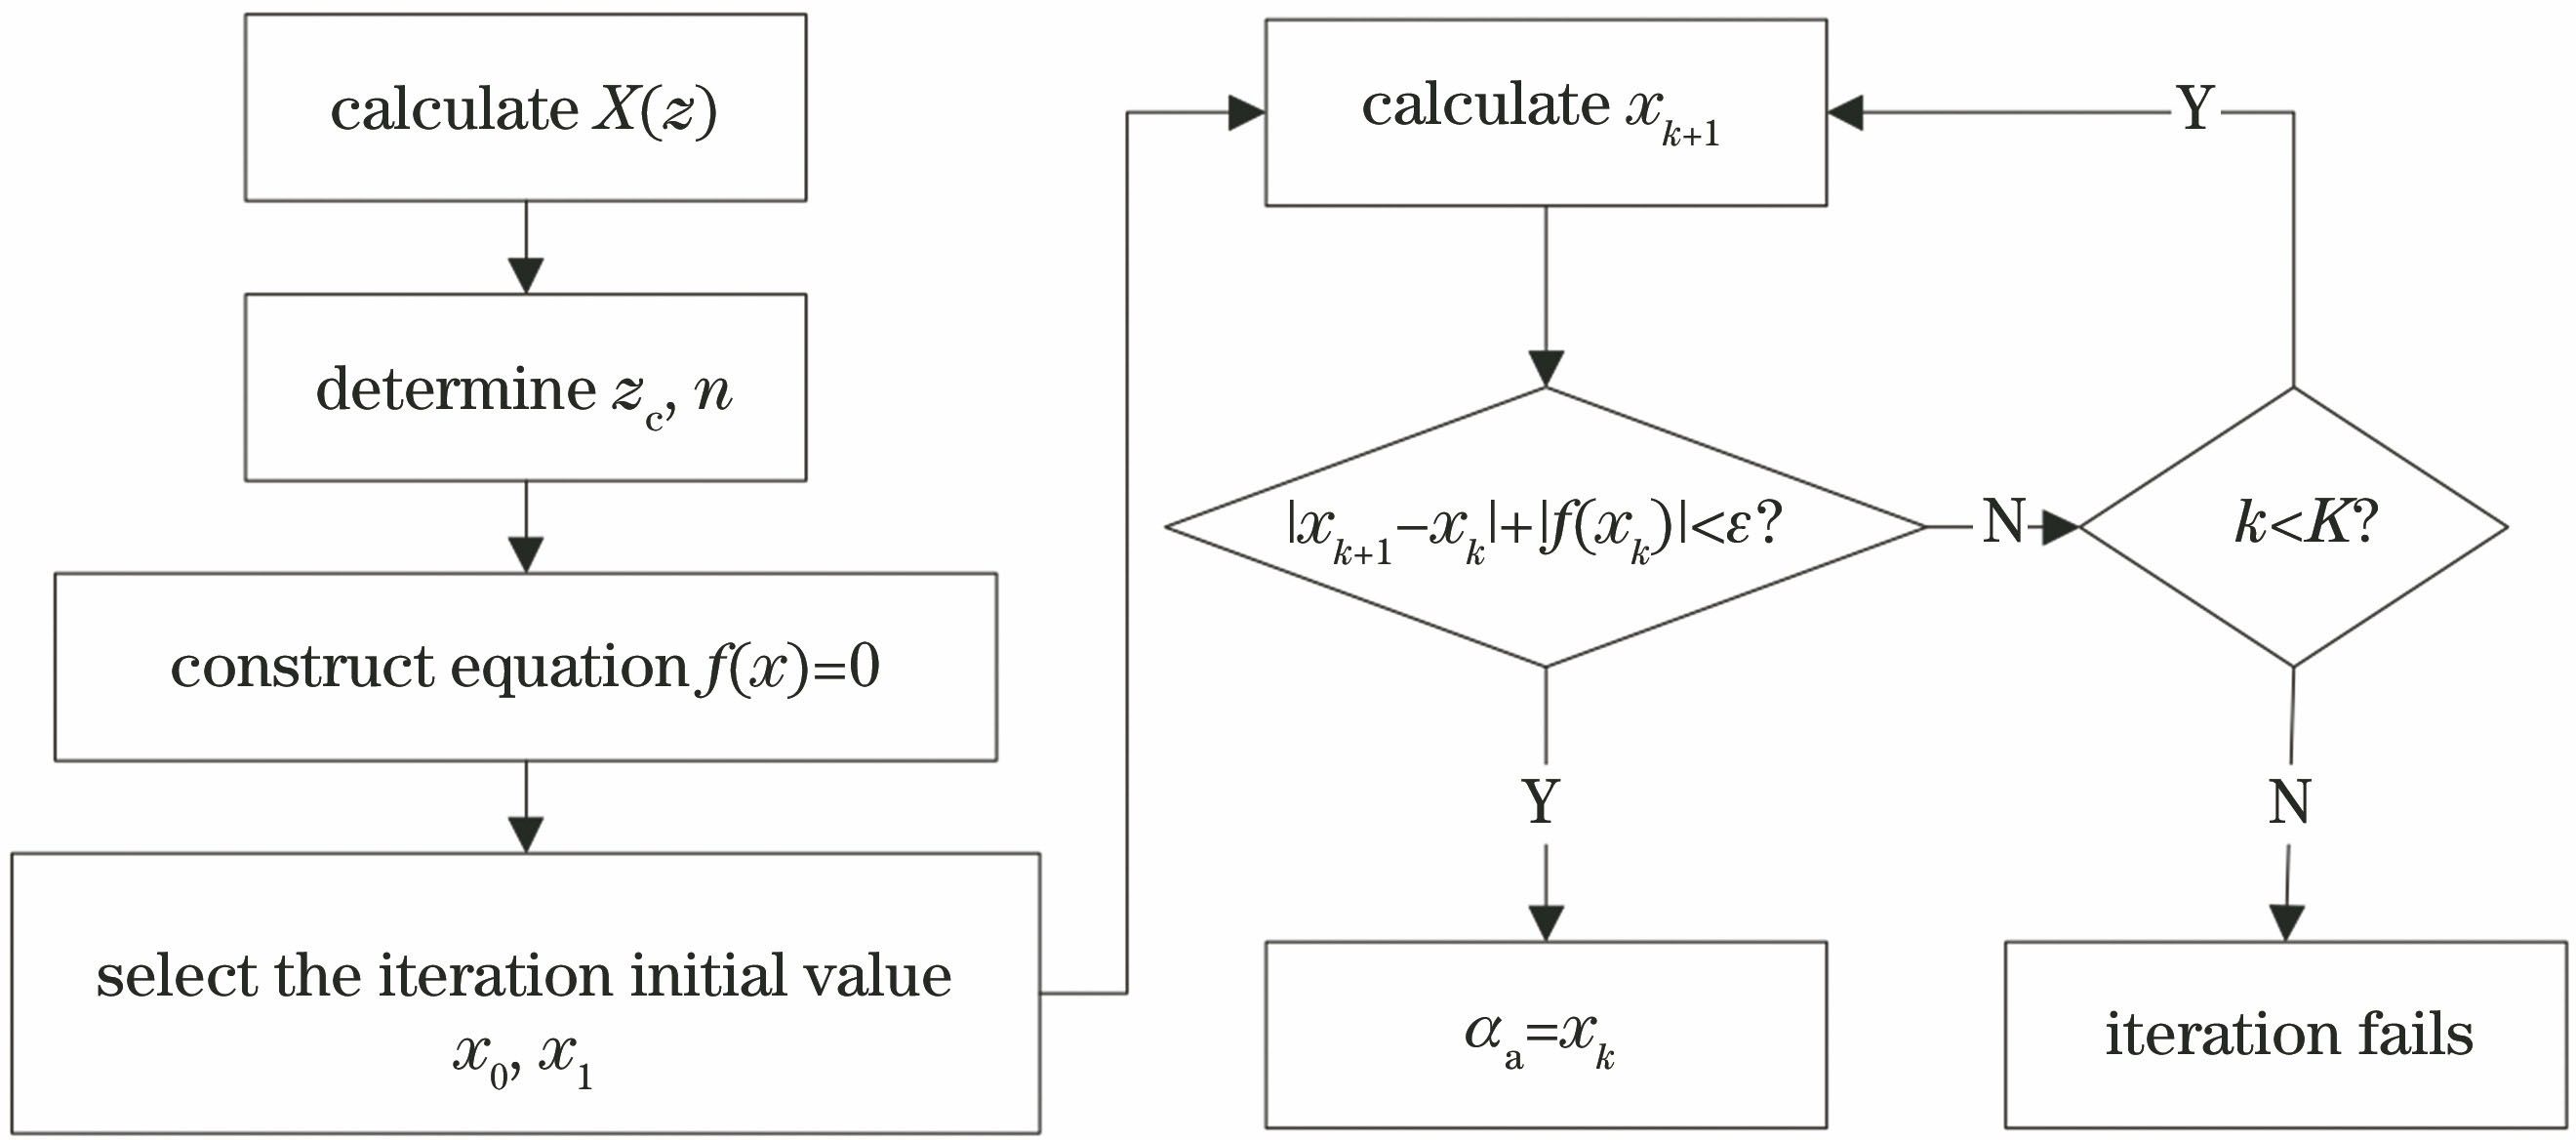 Flow chart of iterative algorithm